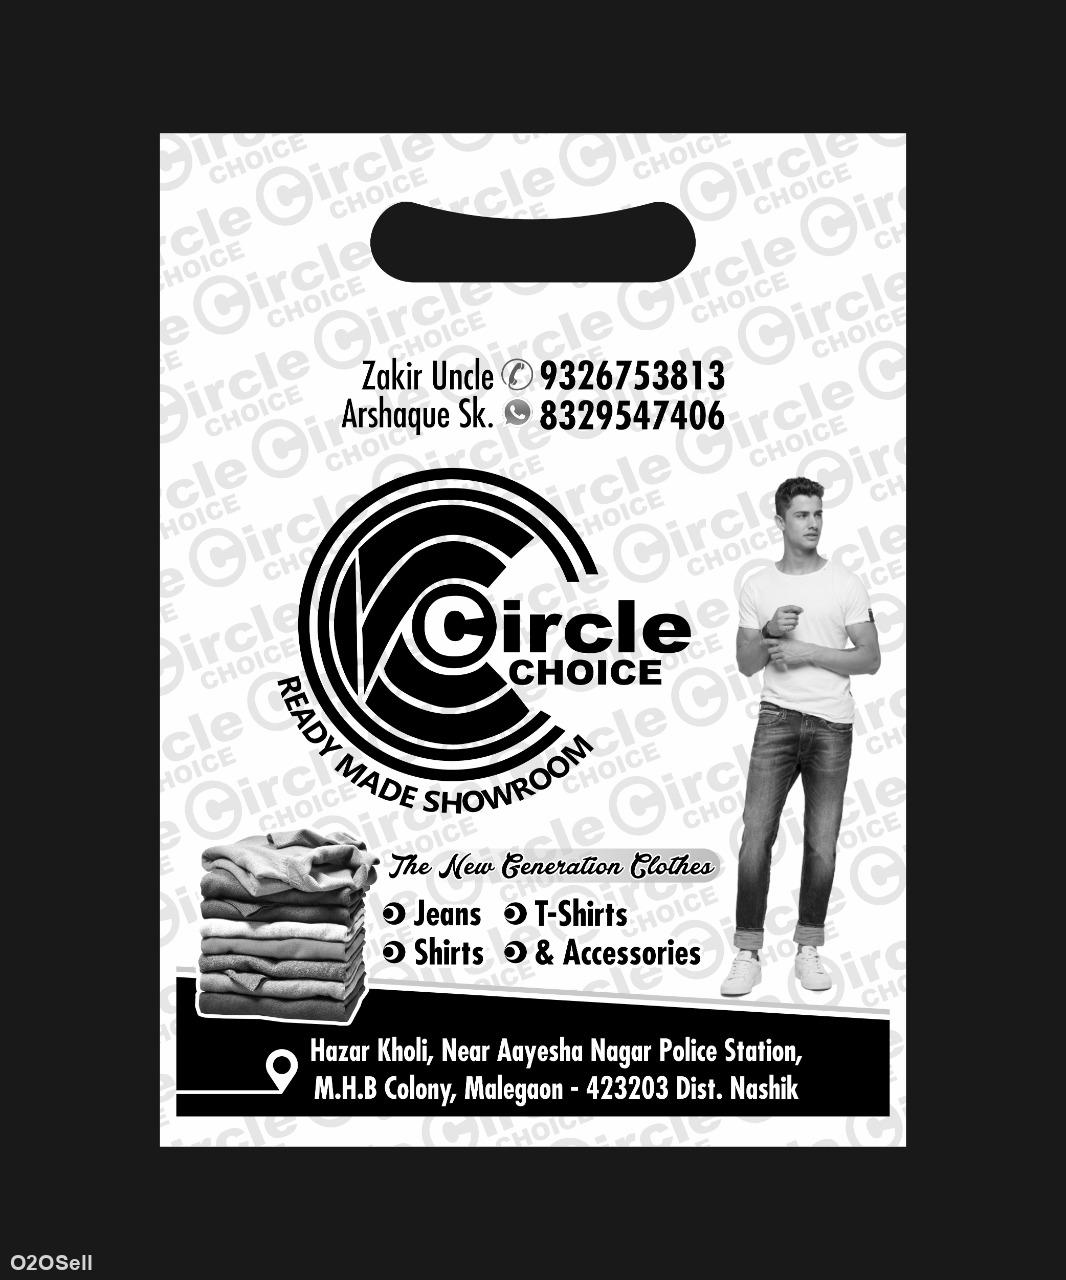 Circle Choice Readymade Showroom - Cover Image